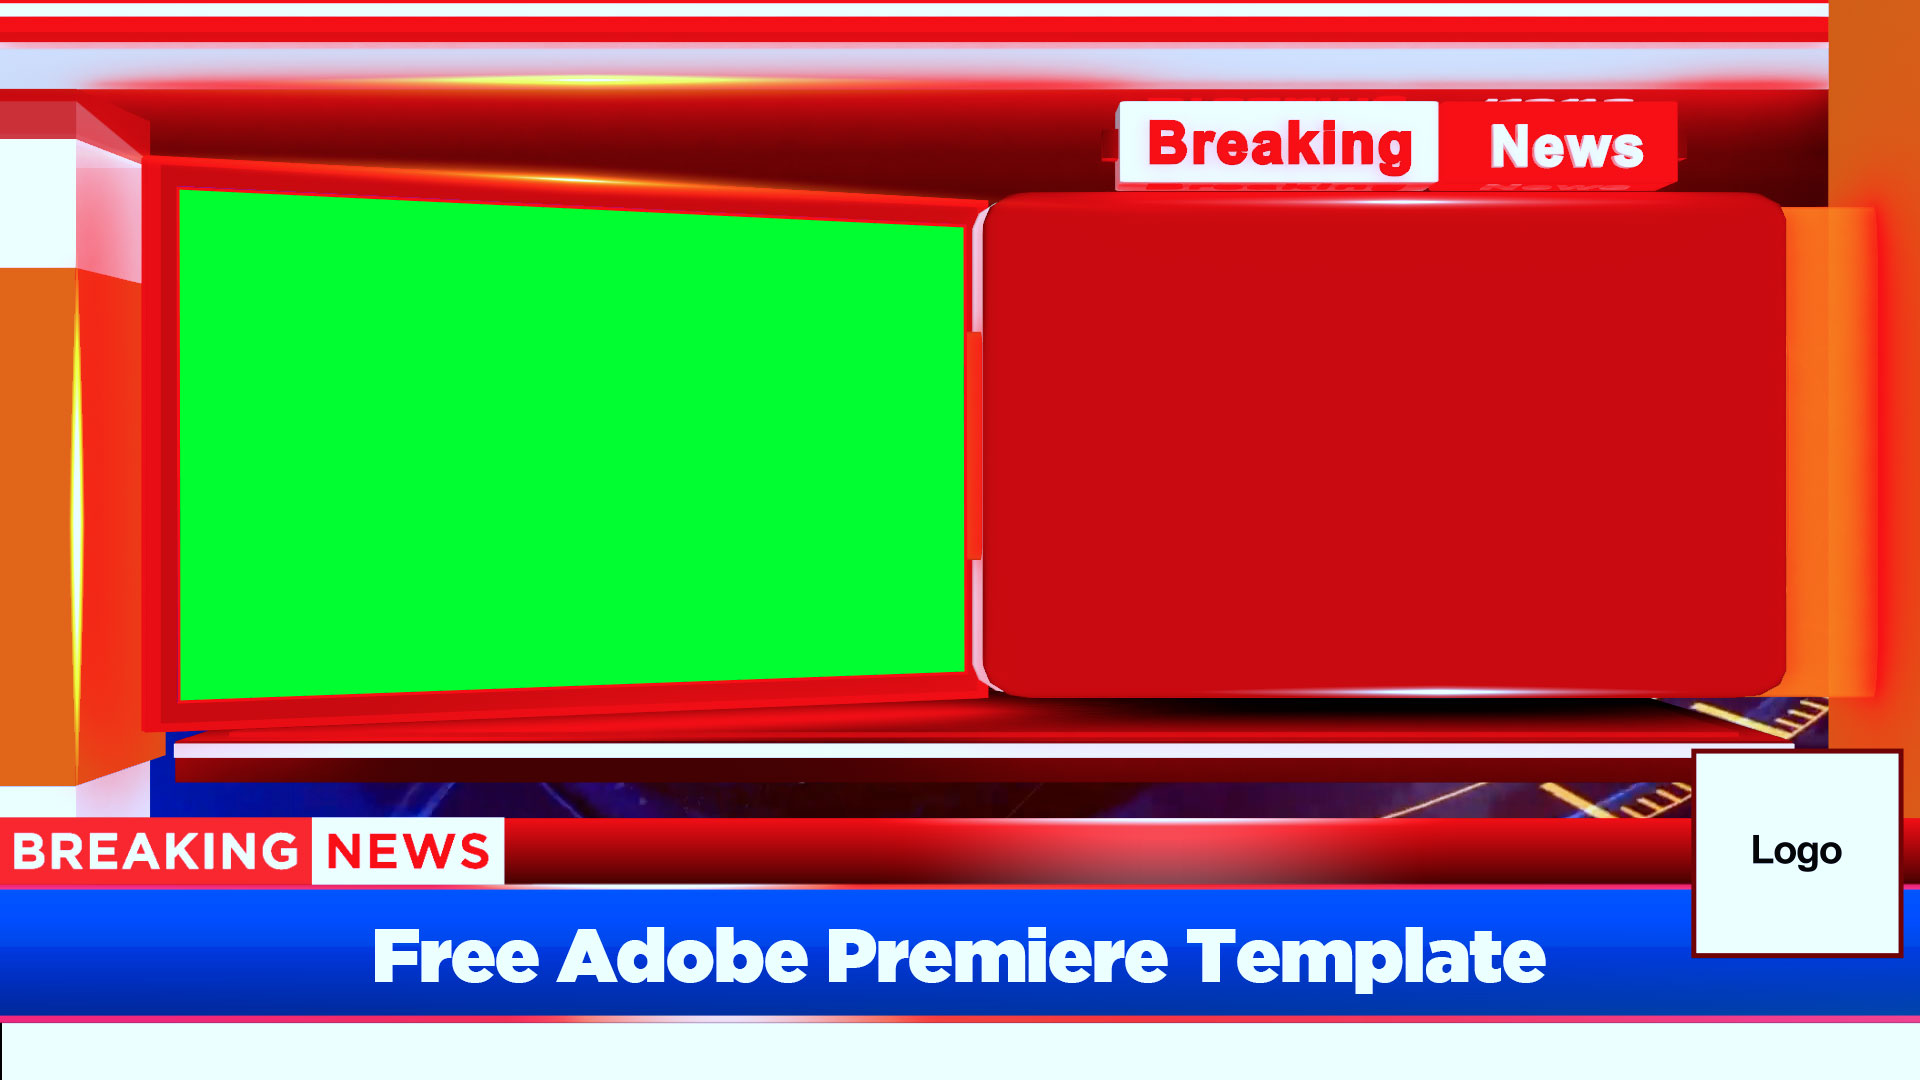 Breaking News Bumper free adobe premiere template by mtc tutorials